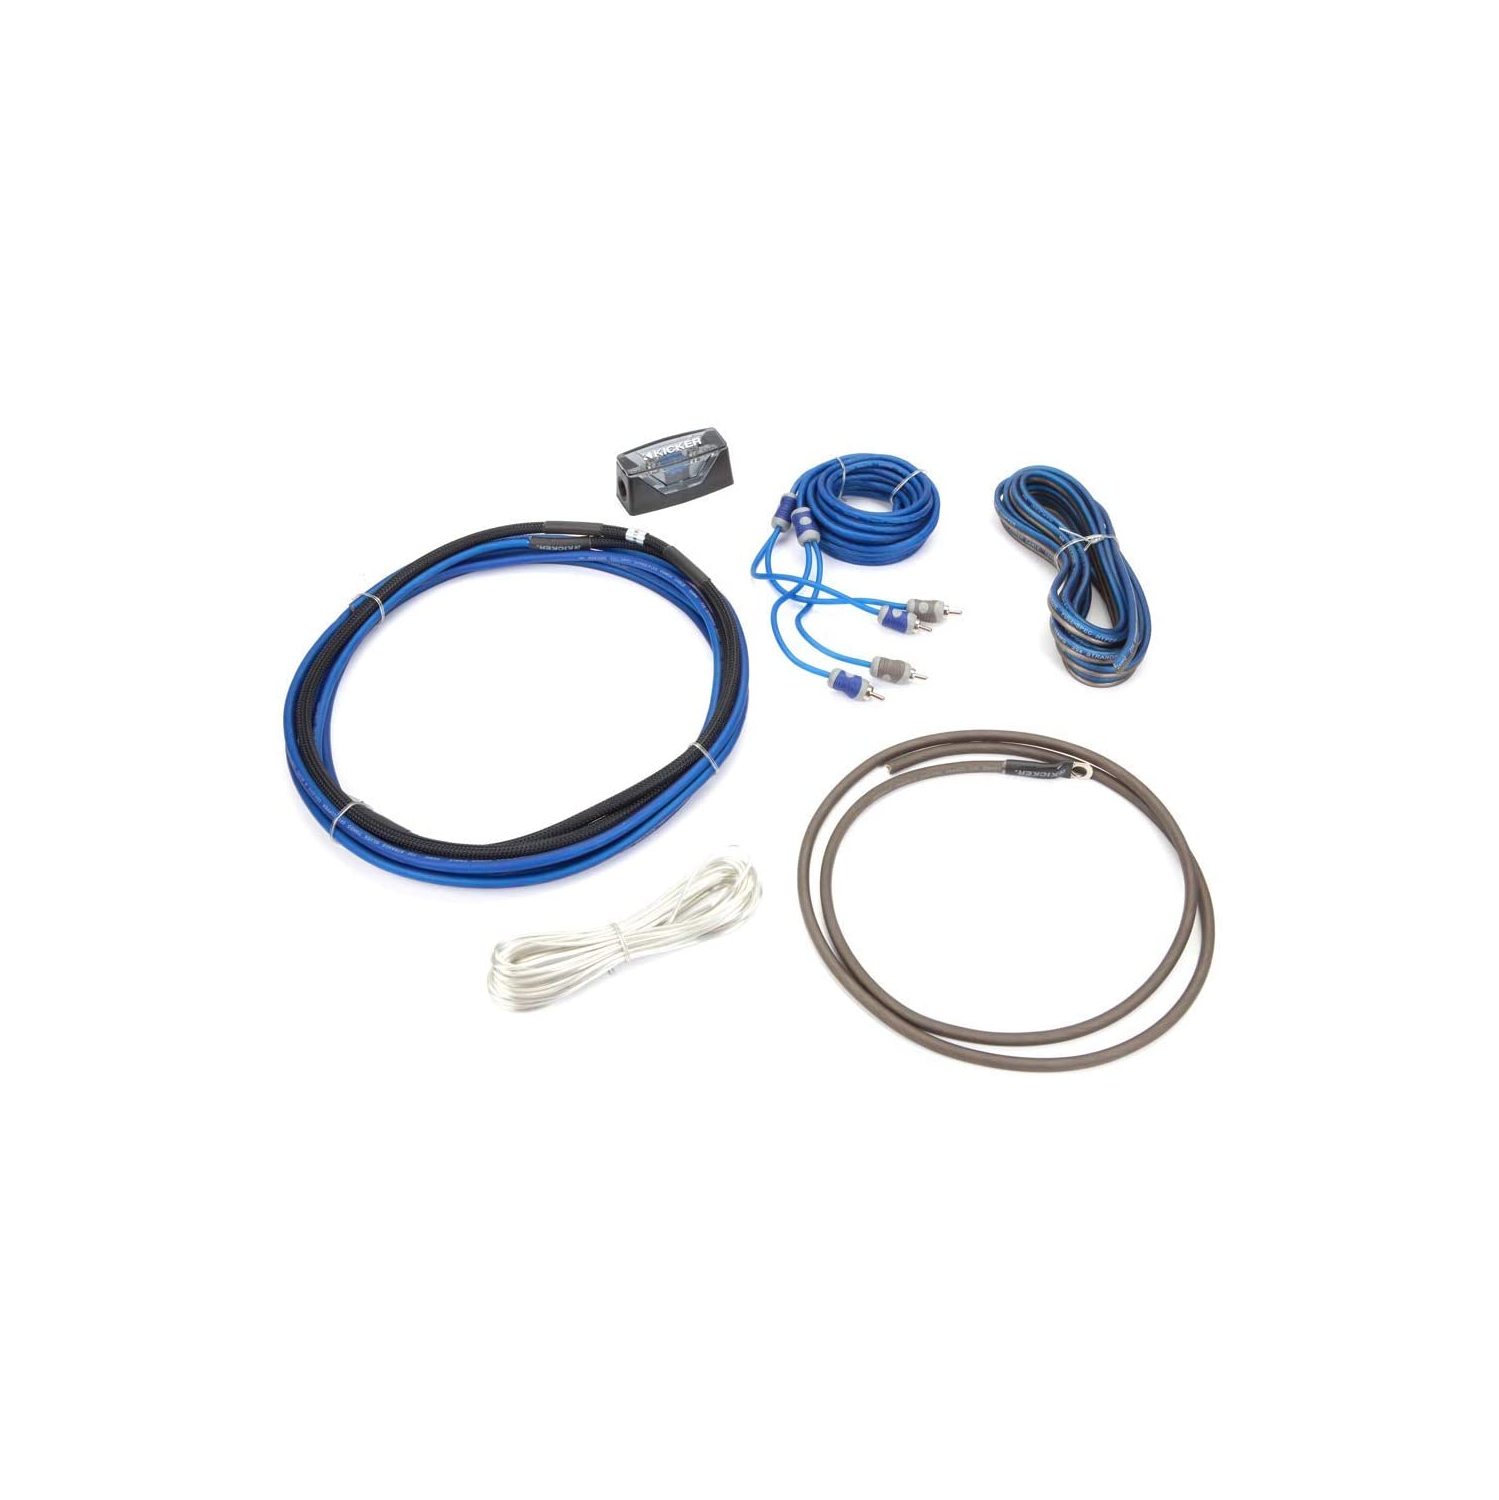 KICKER Premium 8 Gauge 2-Channel Amplifier Wiring Kit